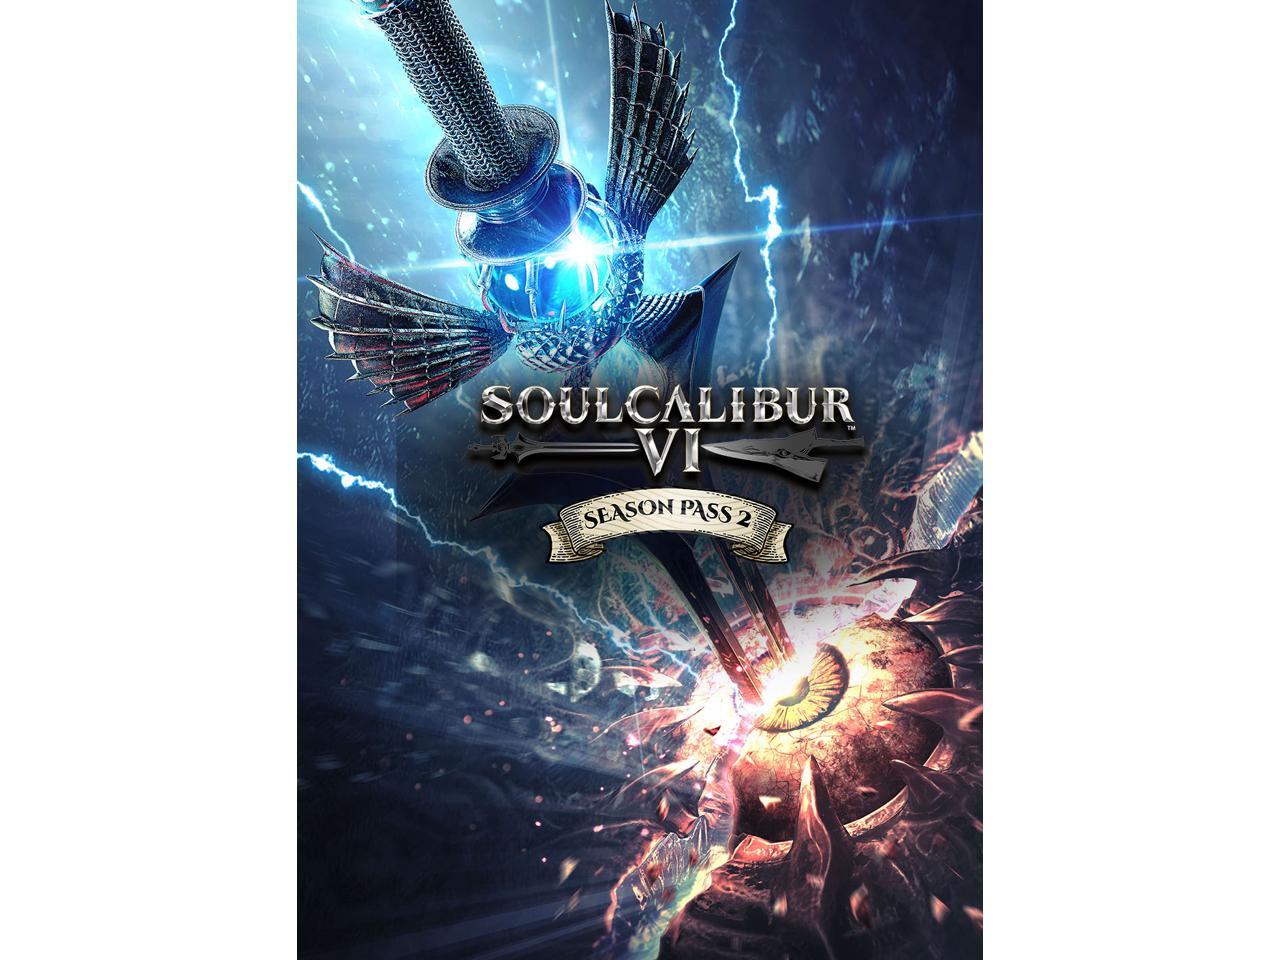 soulcalibur vi game pass